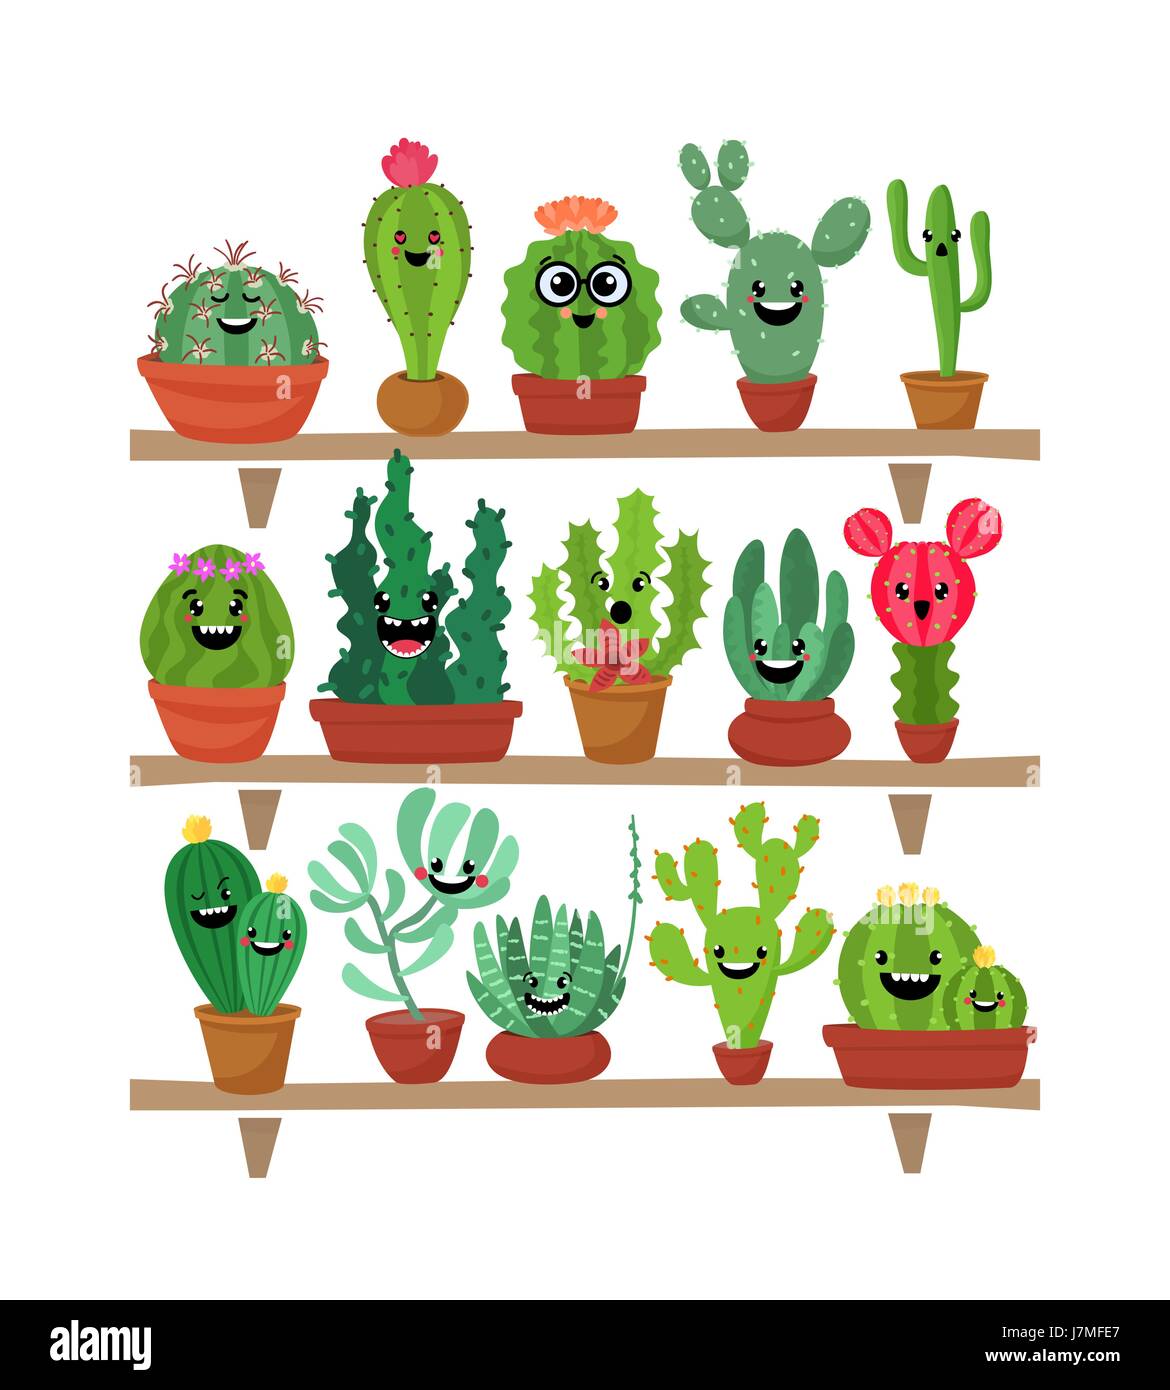 https://c8.alamy.com/comp/J7MFE7/big-set-of-cute-cartoon-cactus-and-succulents-with-funny-faces-cute-J7MFE7.jpg